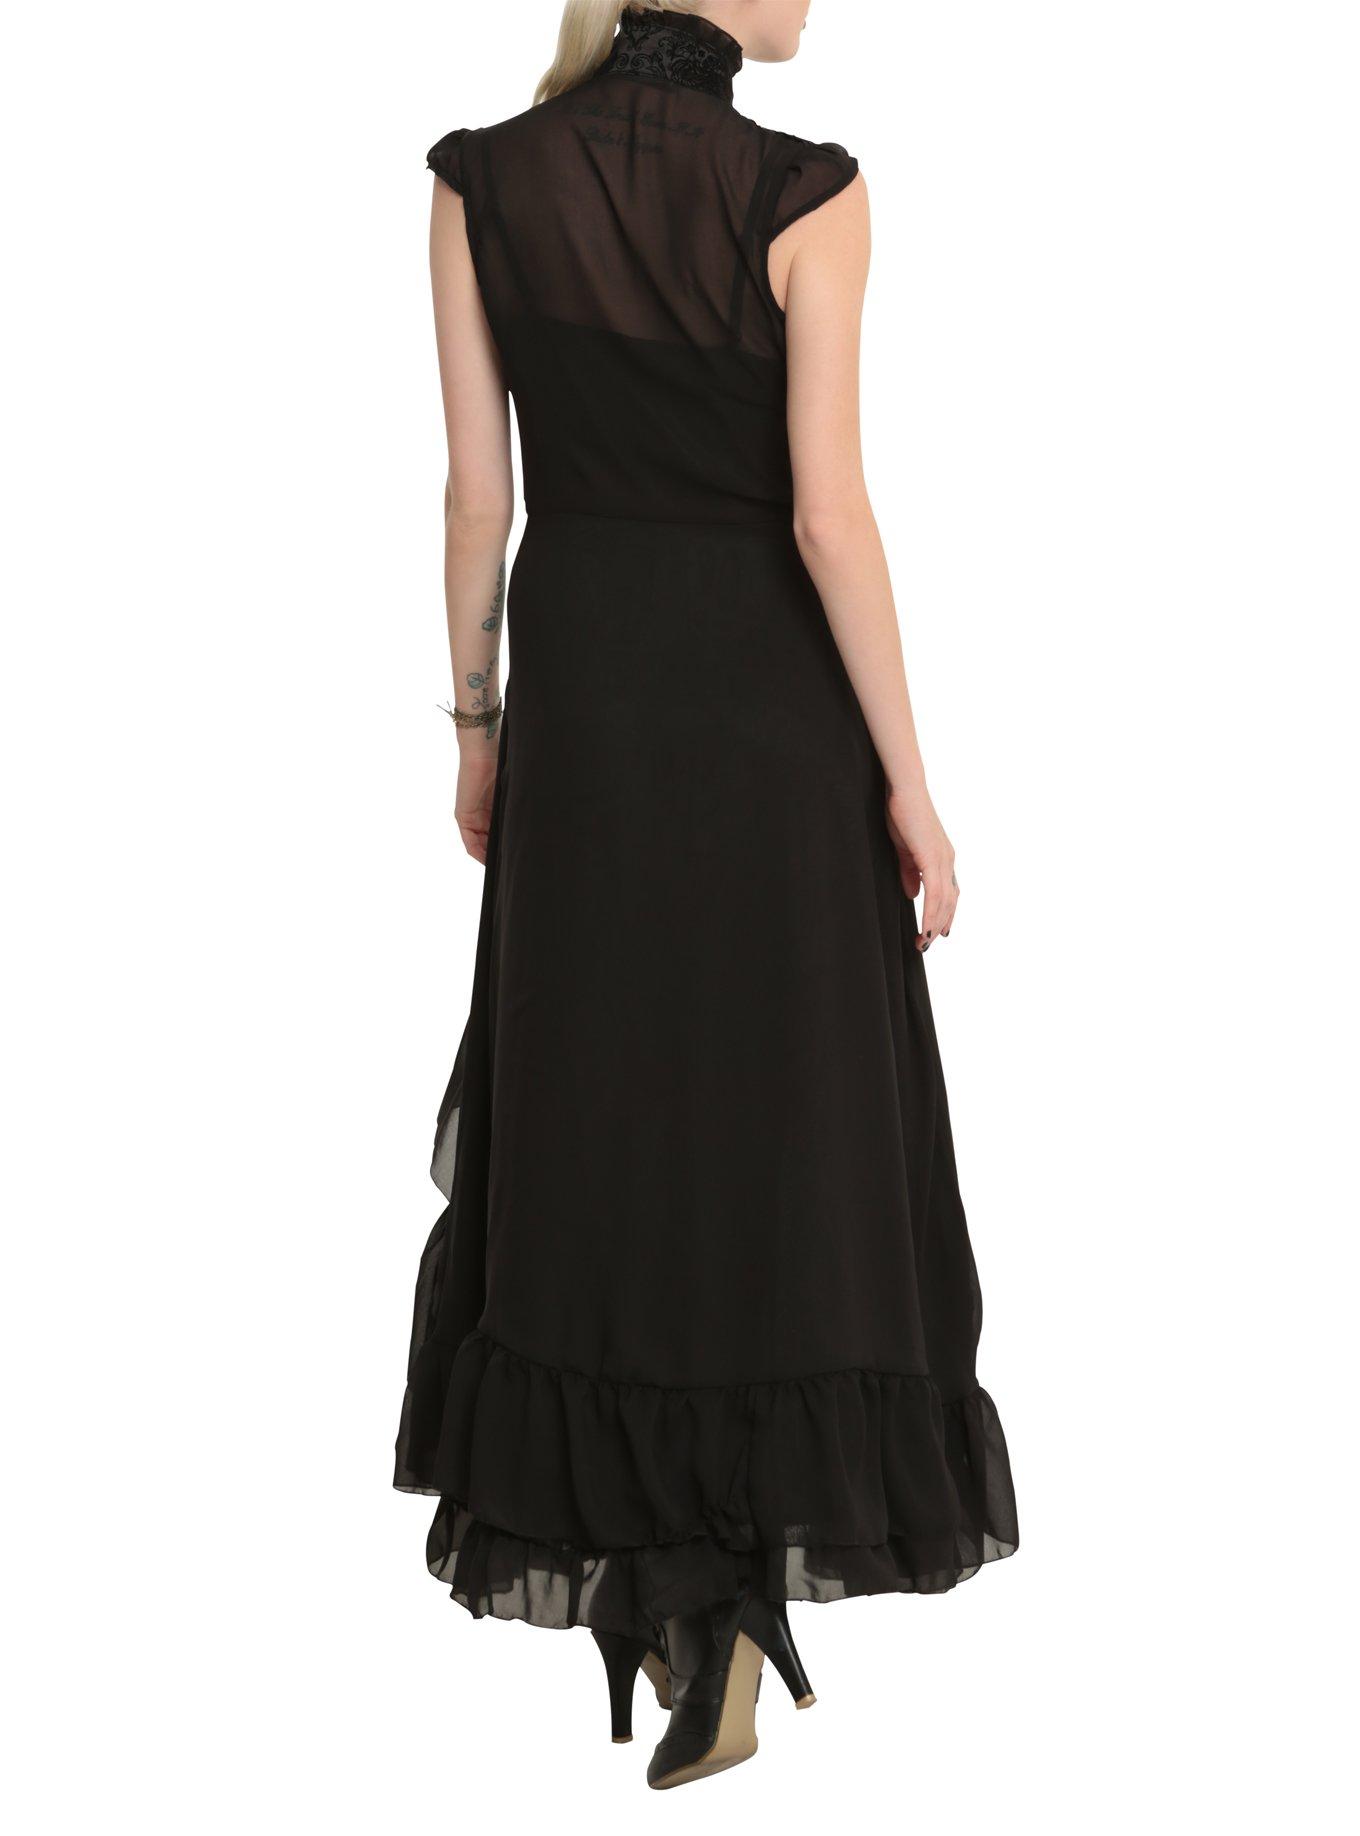 Jawbreaker Black Victorian Dress, , alternate